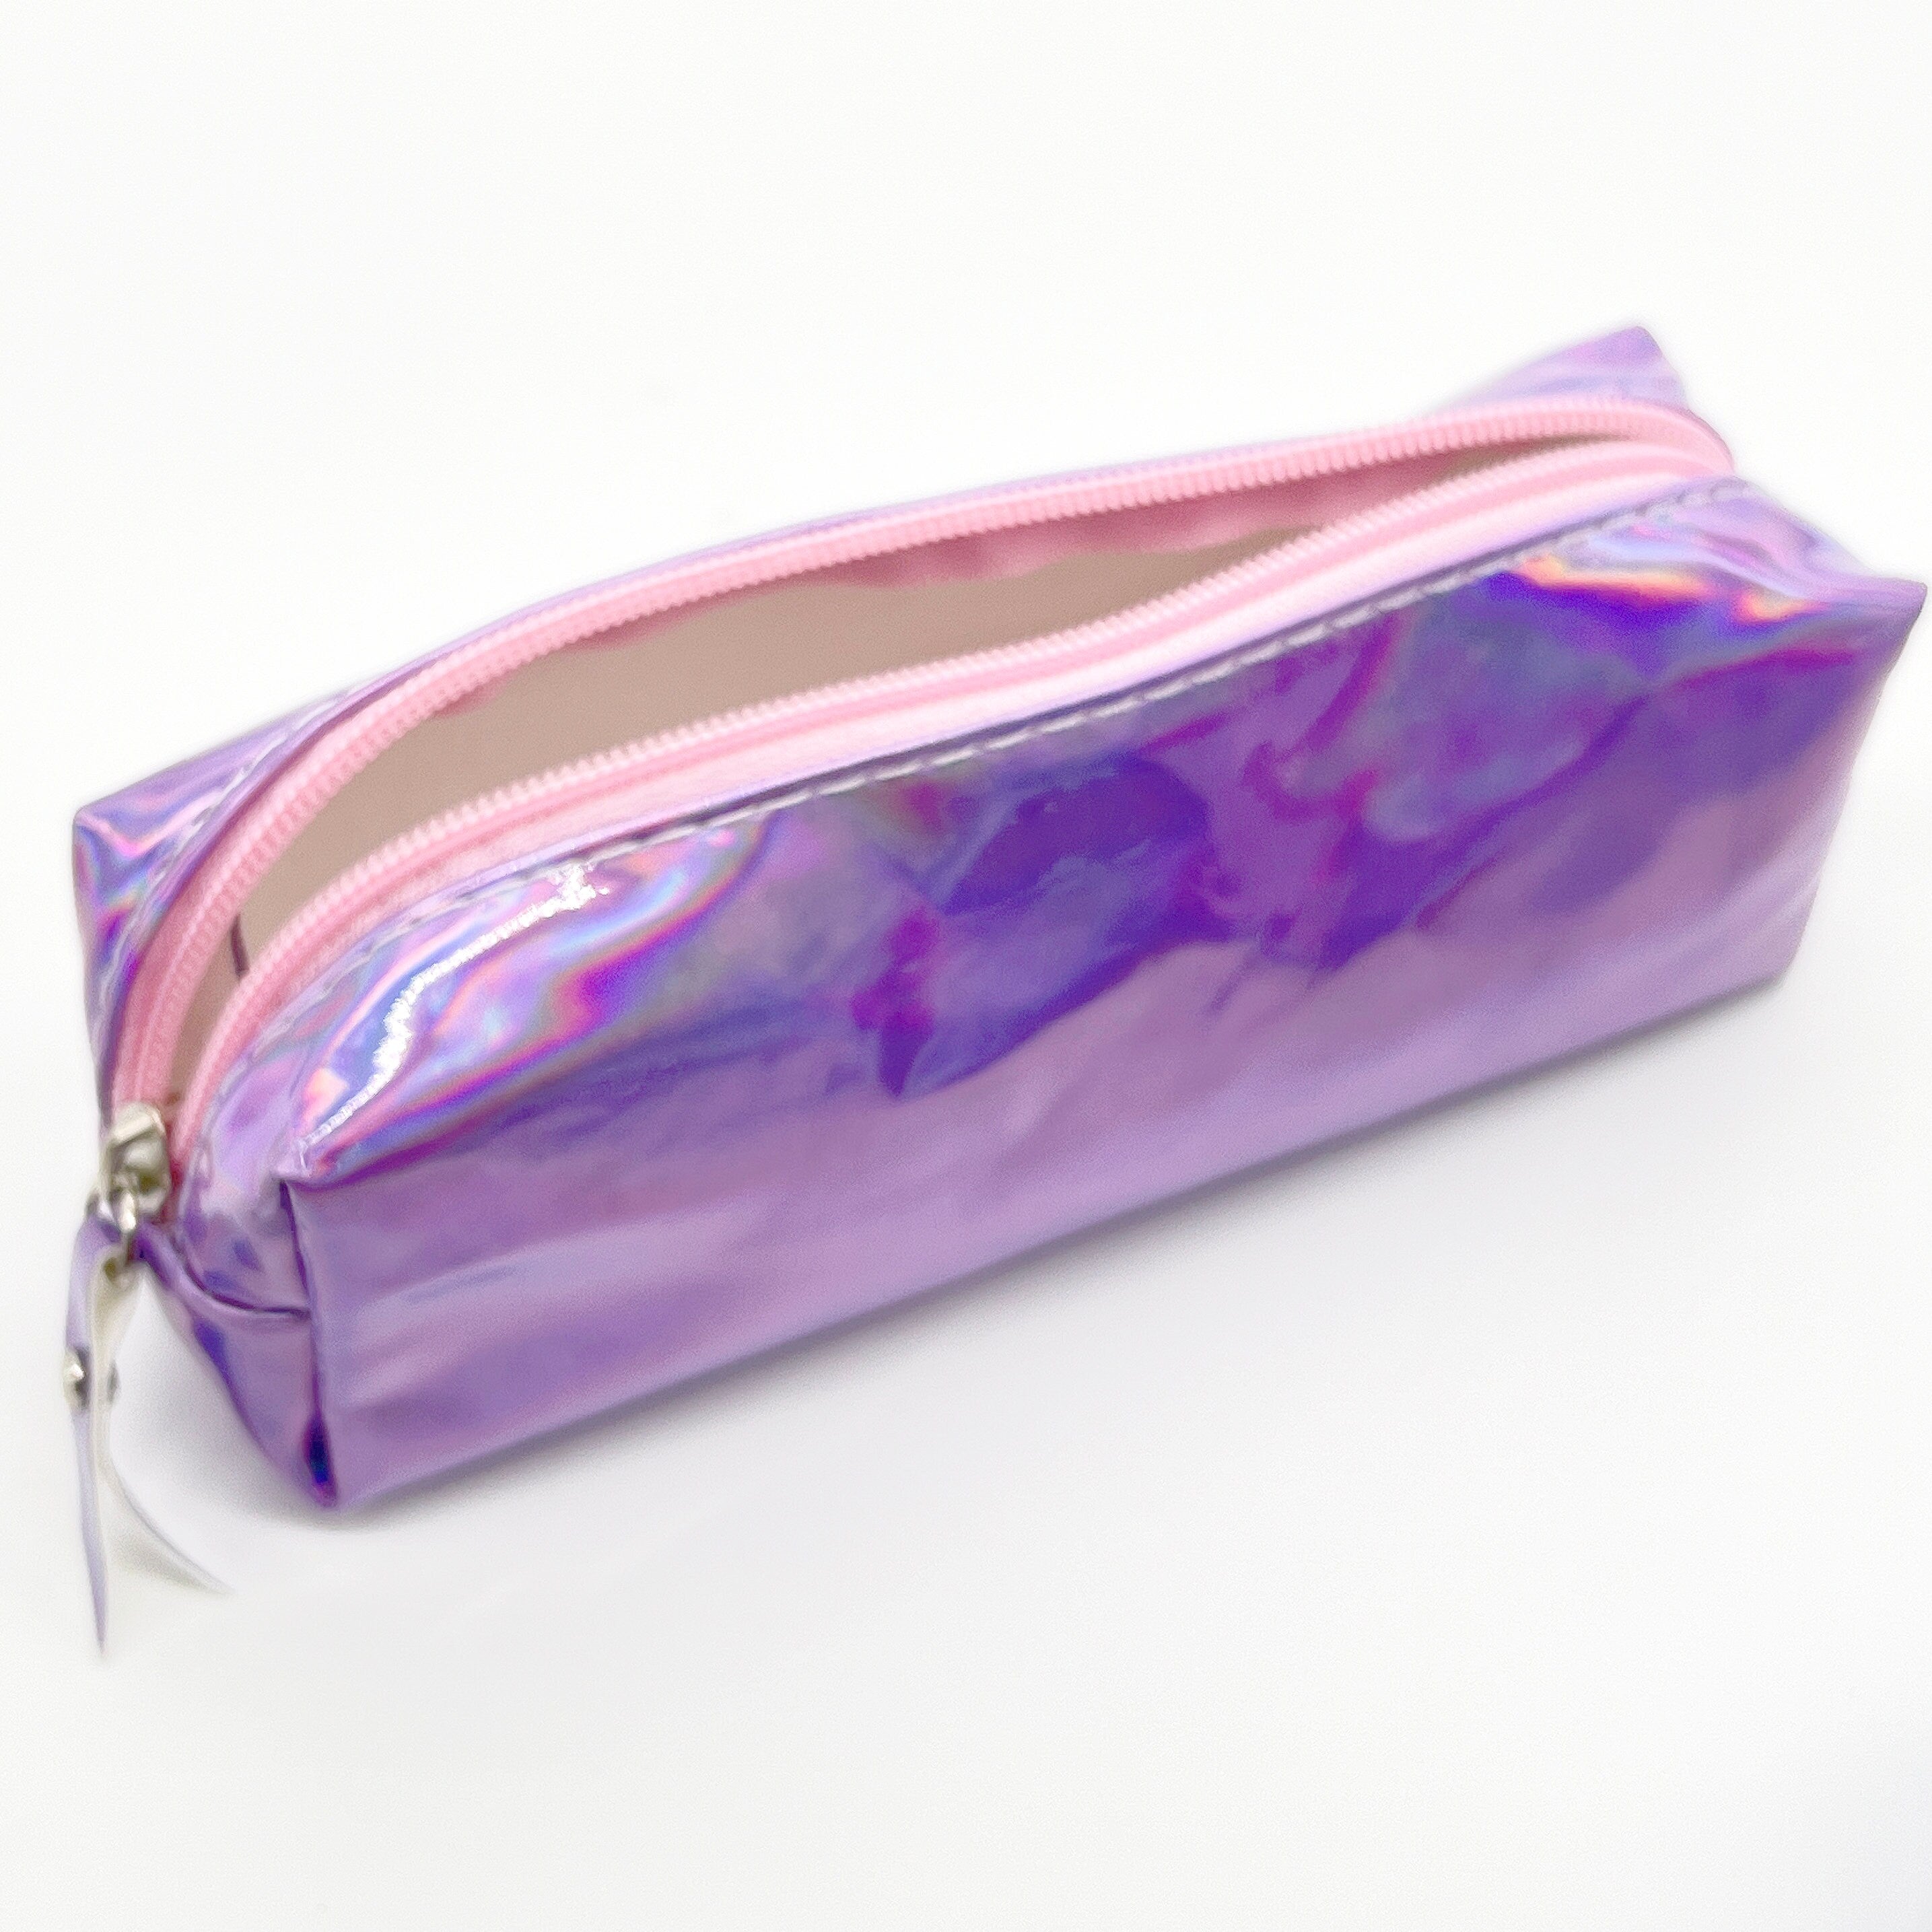 Purple Metallic 6pc Sewing Essentials Kit- The Perfect Gift! - Stitch Love Studio